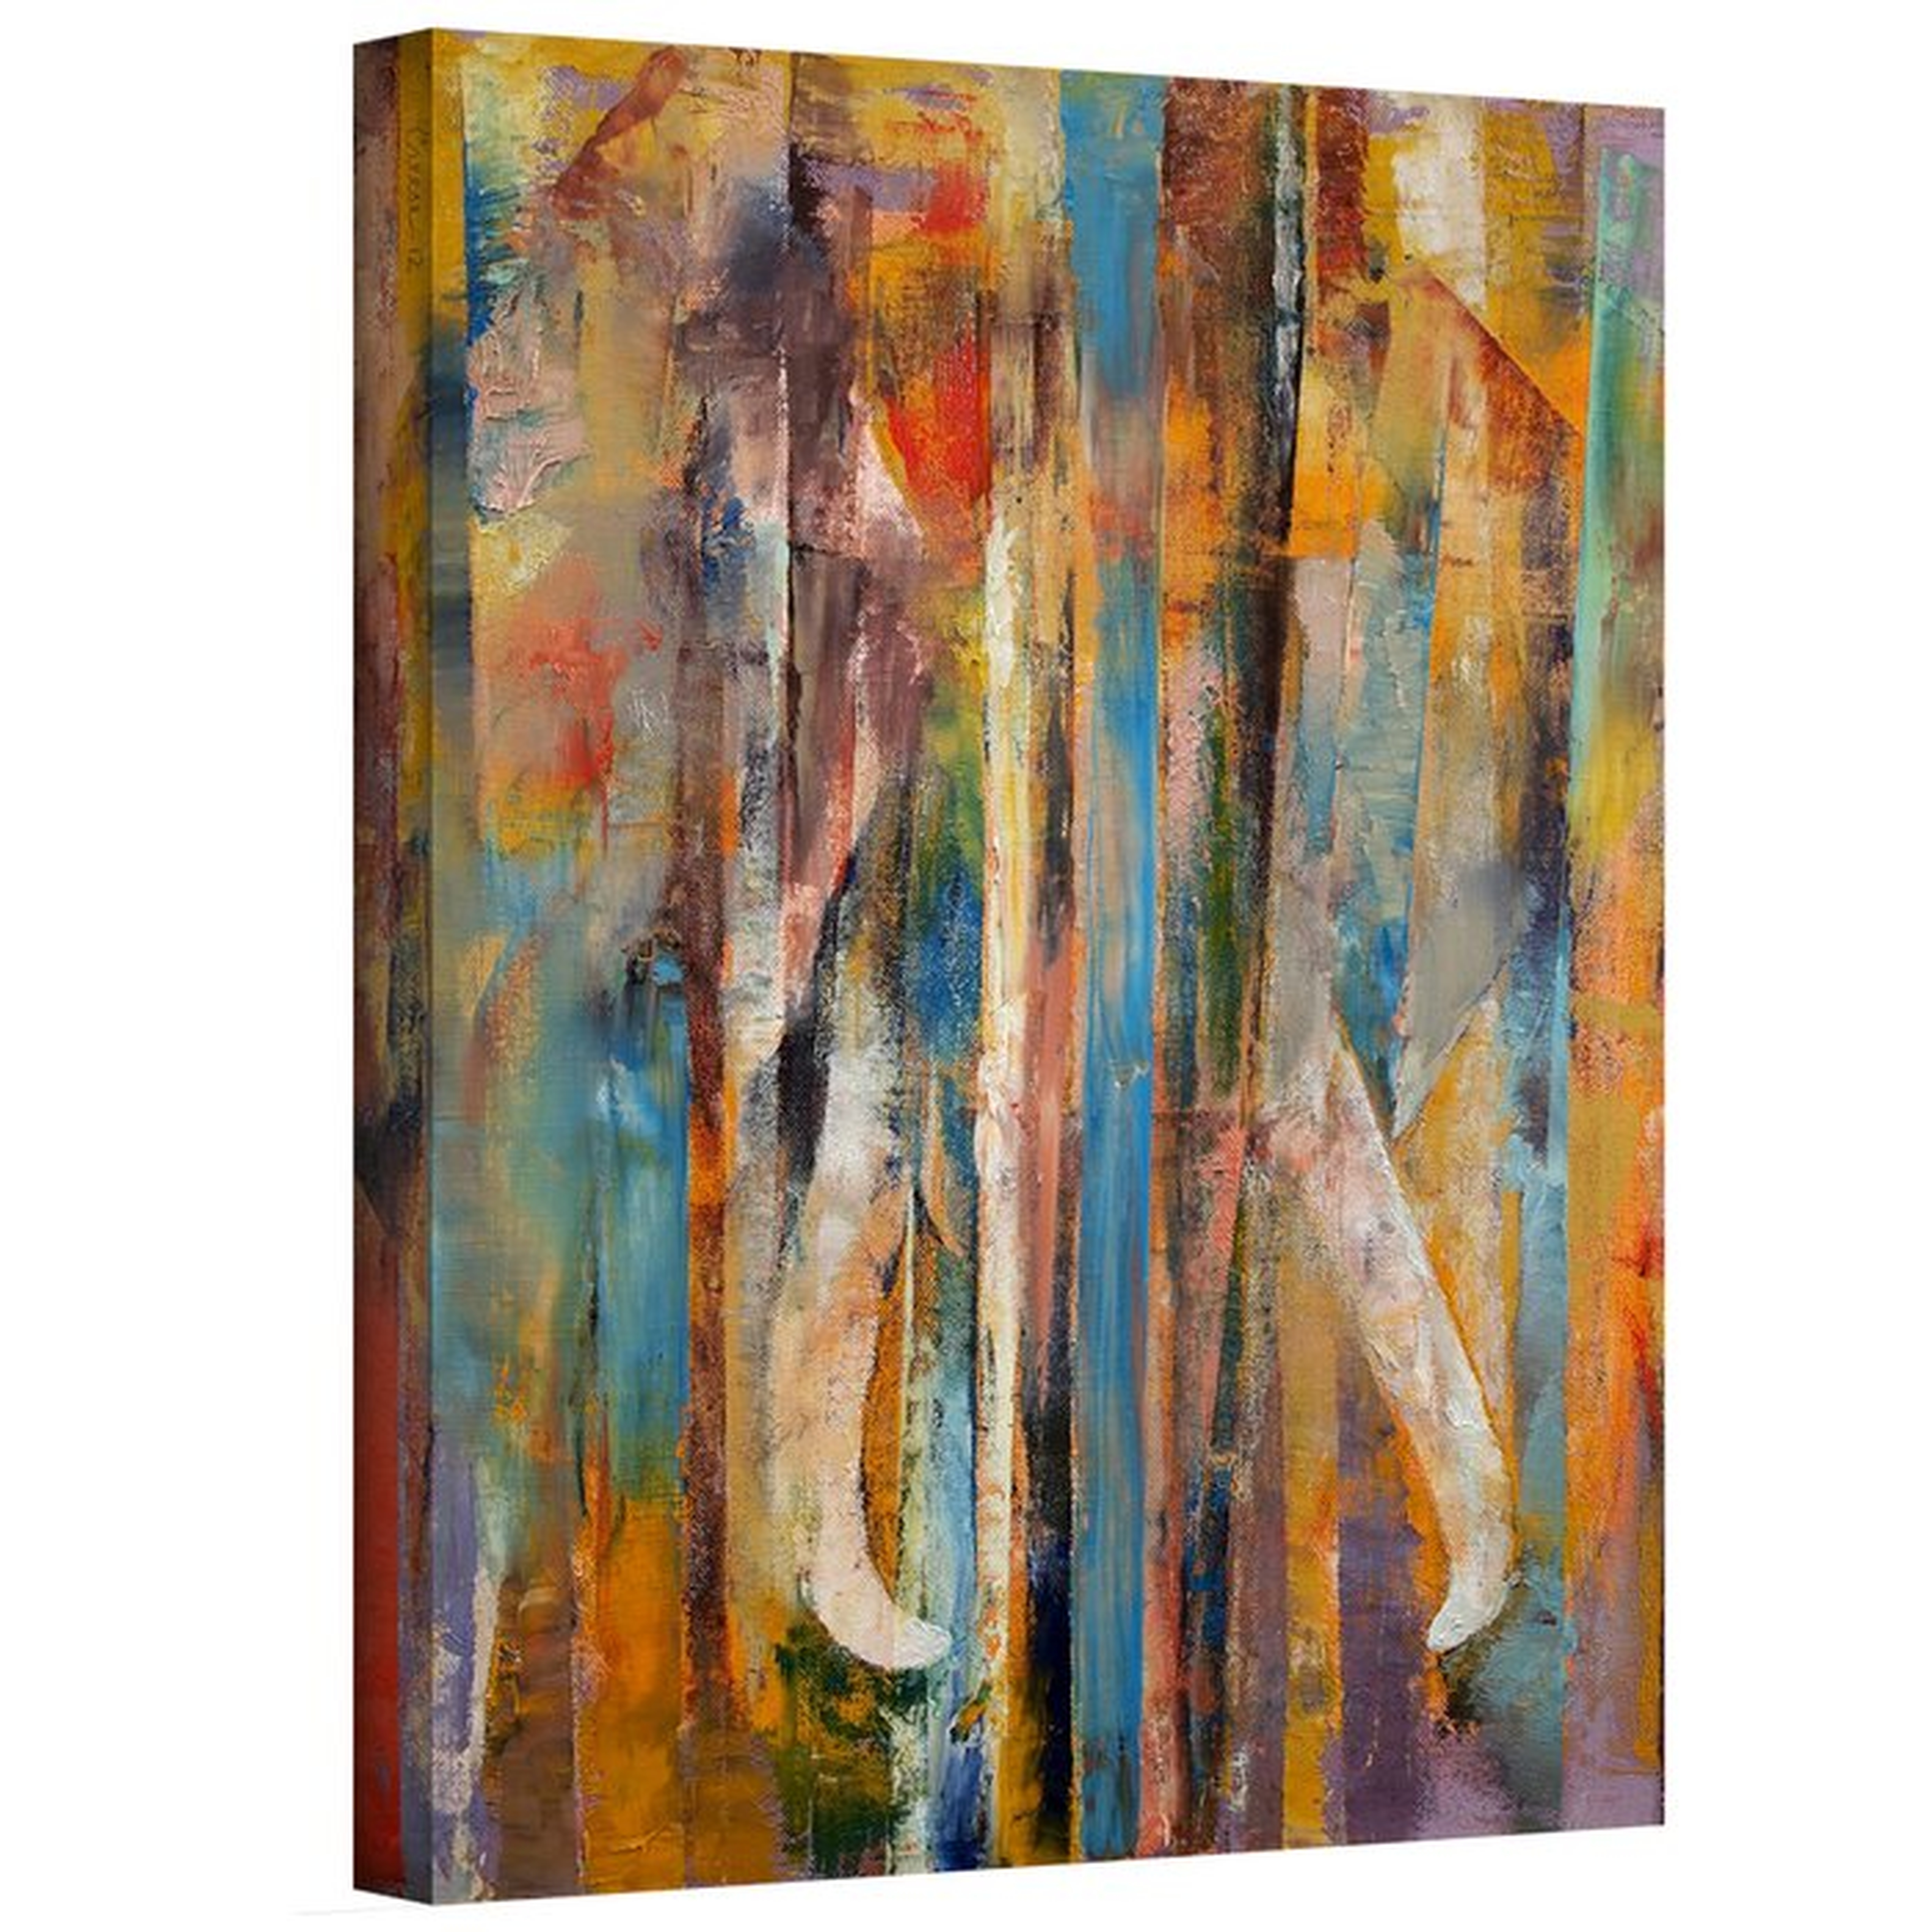 'Elephant' Painting on Wrapped Canvas Print - Wayfair